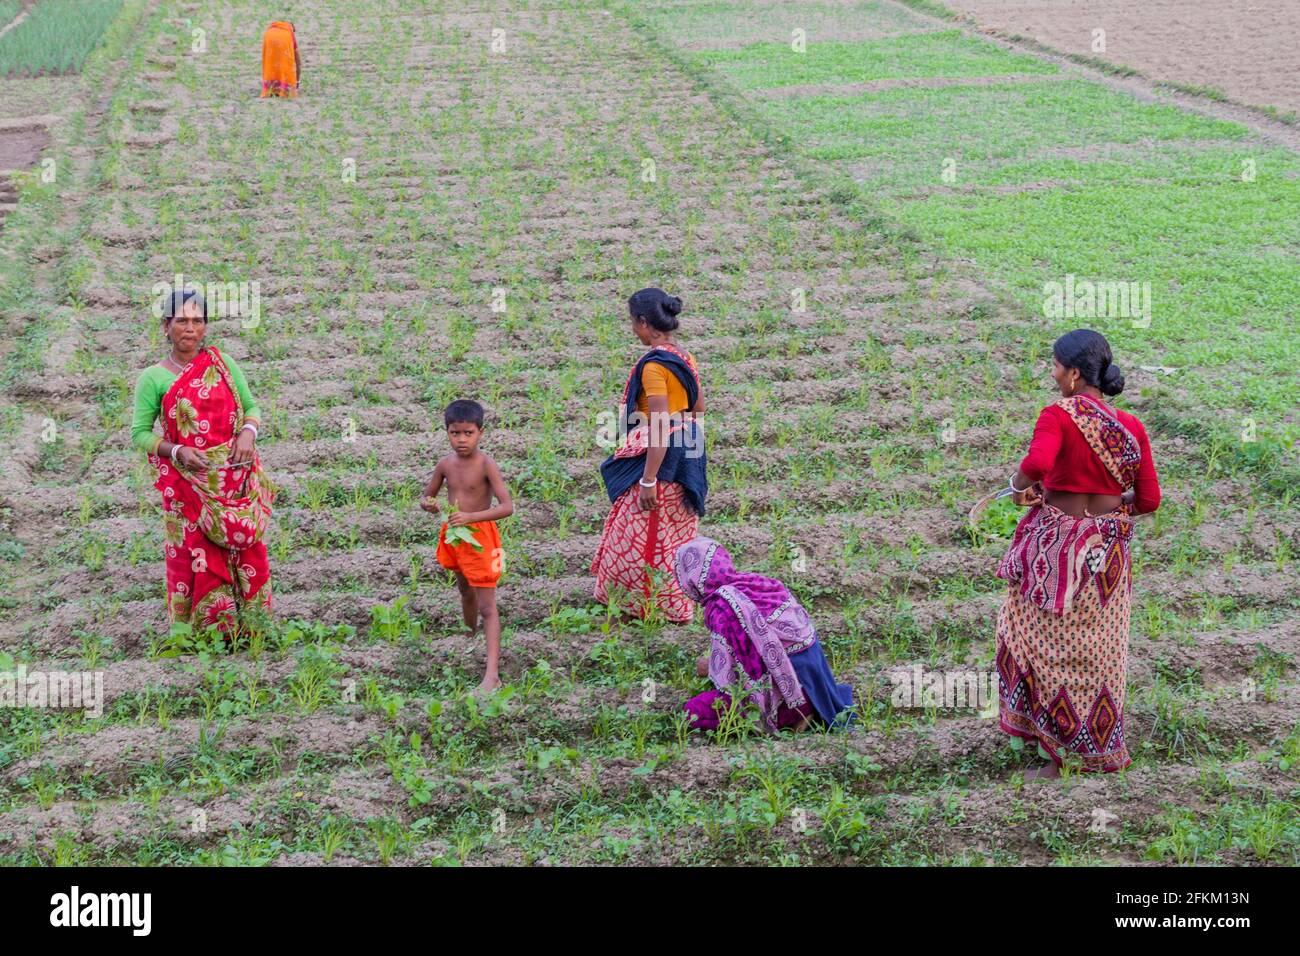 KANTANAGAR, BANGLADESH - NOVEMBER 8, 2016: Peasant family on a field in Kantanagar near Dinajpur, Bangladesh Stock Photo